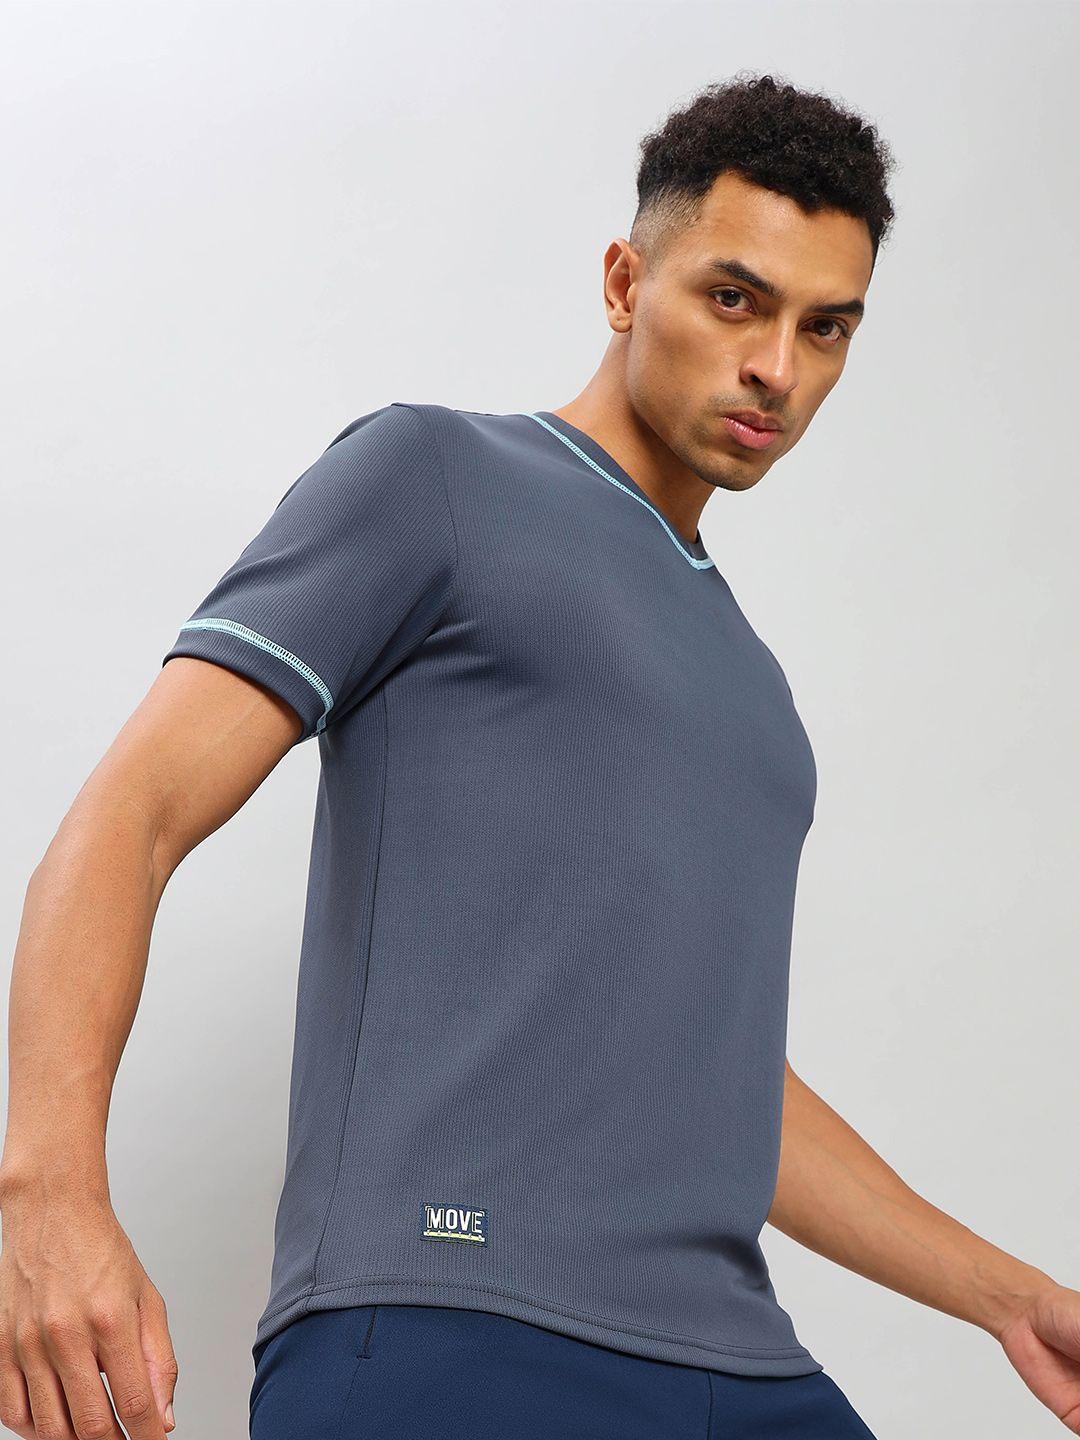 technosport striped v-neck antimicrobial pockets slim fit sports t-shirt